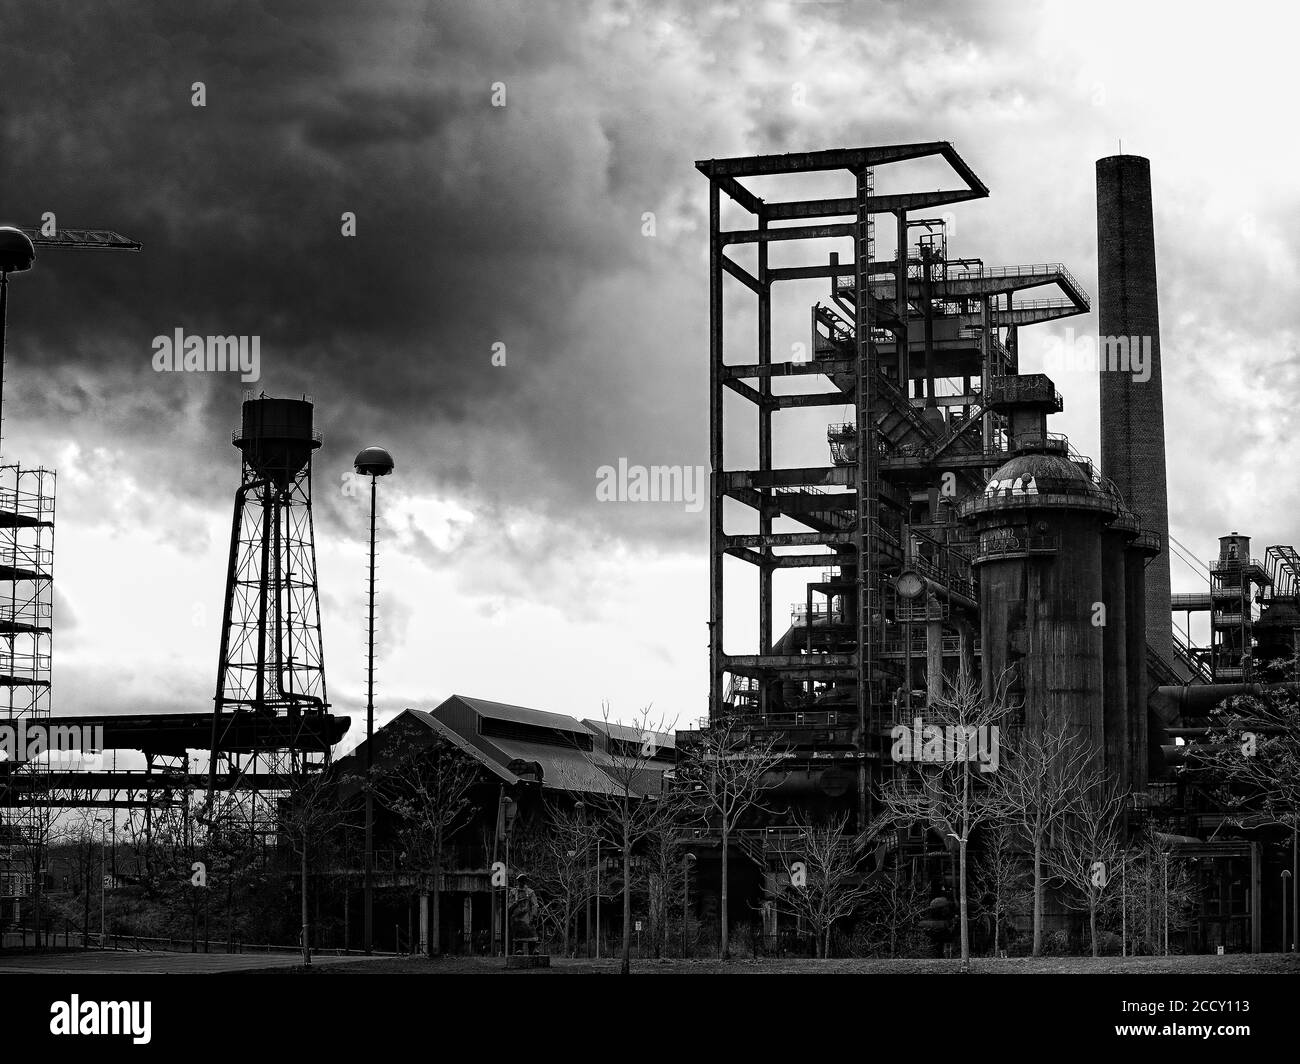 Ex impianto di altoforno, acciaierie, monumento industriale, zona industriale, Phoenix-West, Hoerde, Dortmund, zona Ruhr, Renania settentrionale-Vestfalia Foto Stock